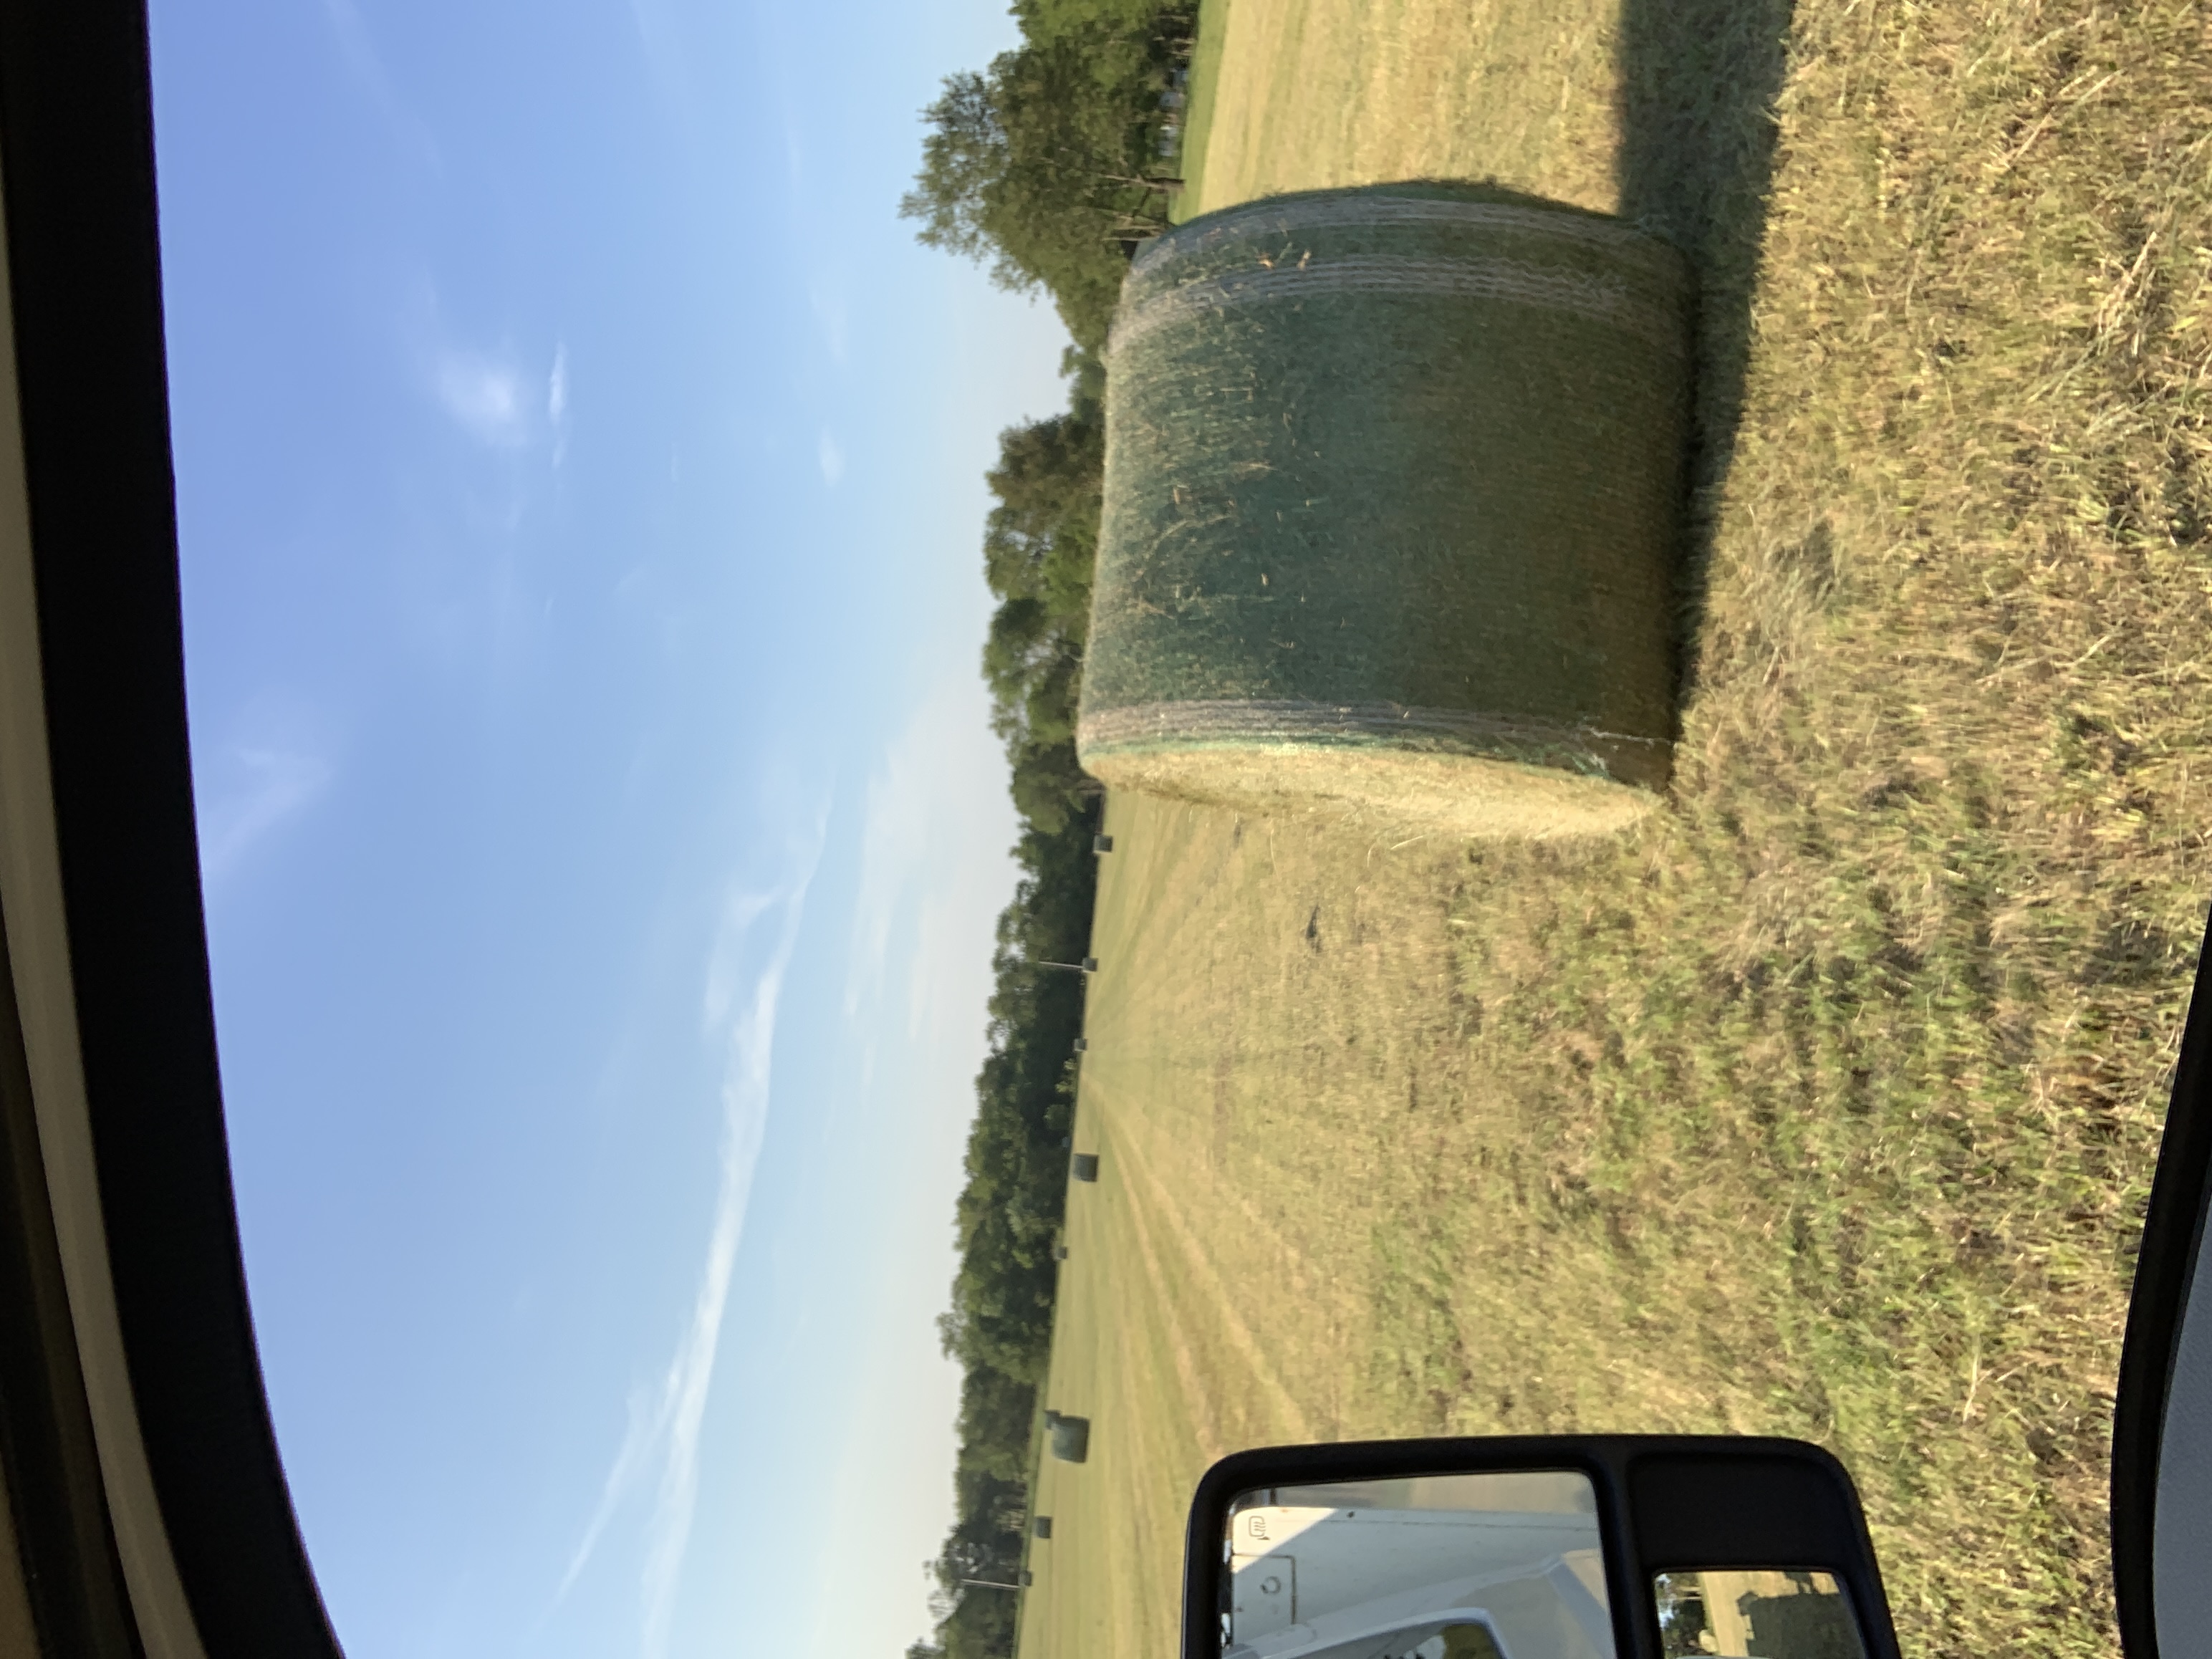 Hay for Sale Oklahoma